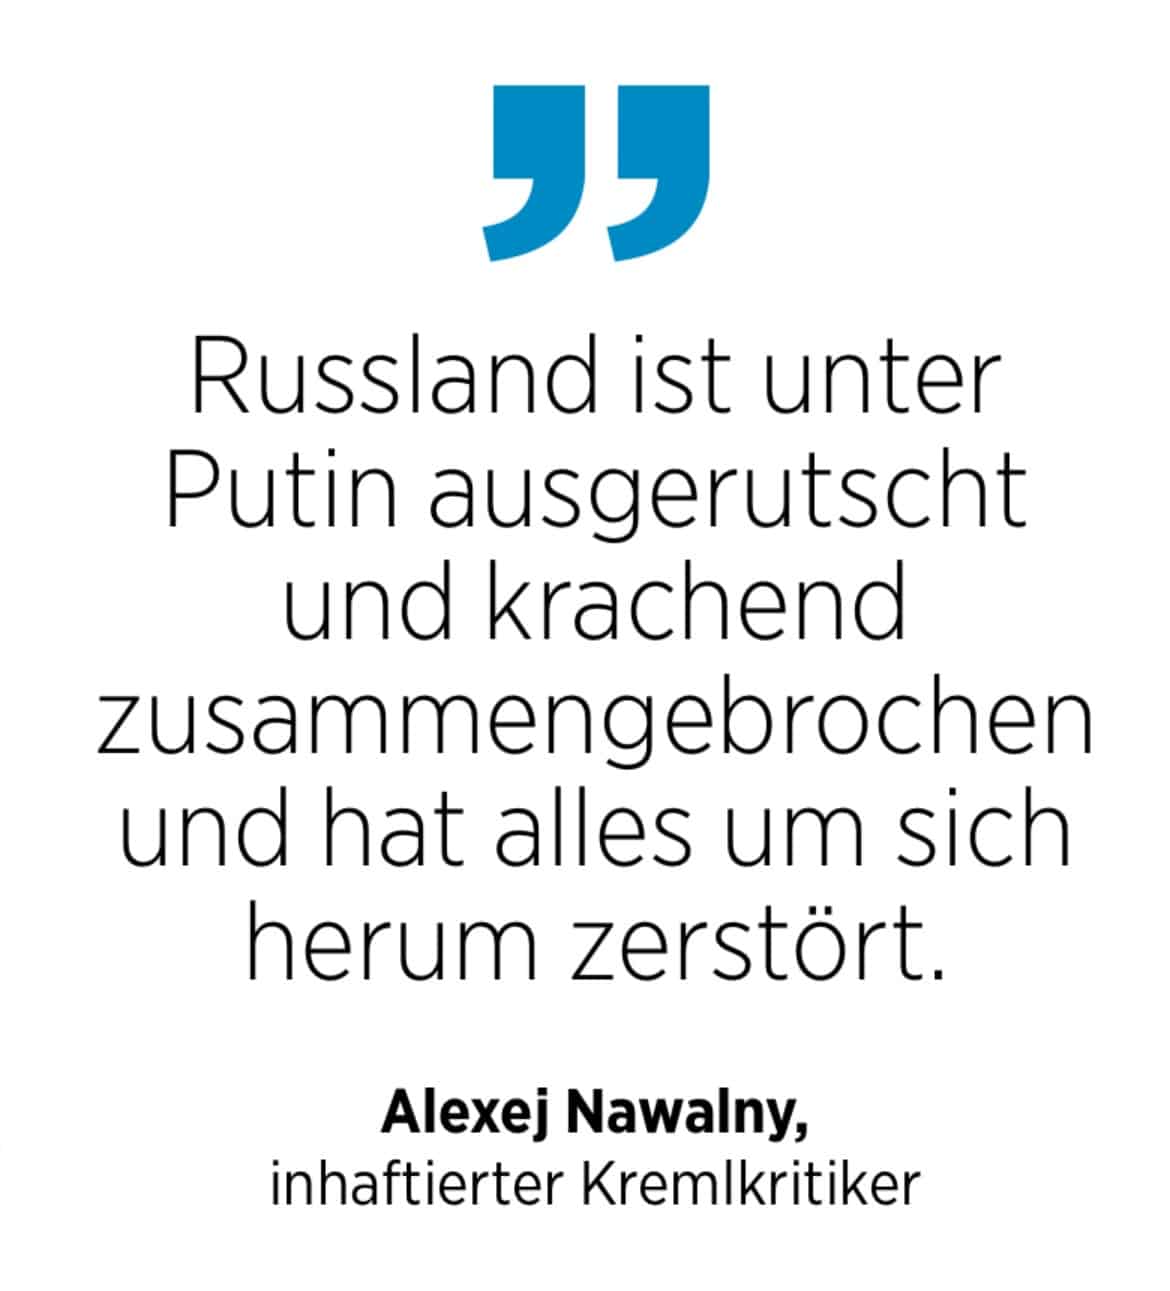 Nawalny-Zitat zu Russland und Putin